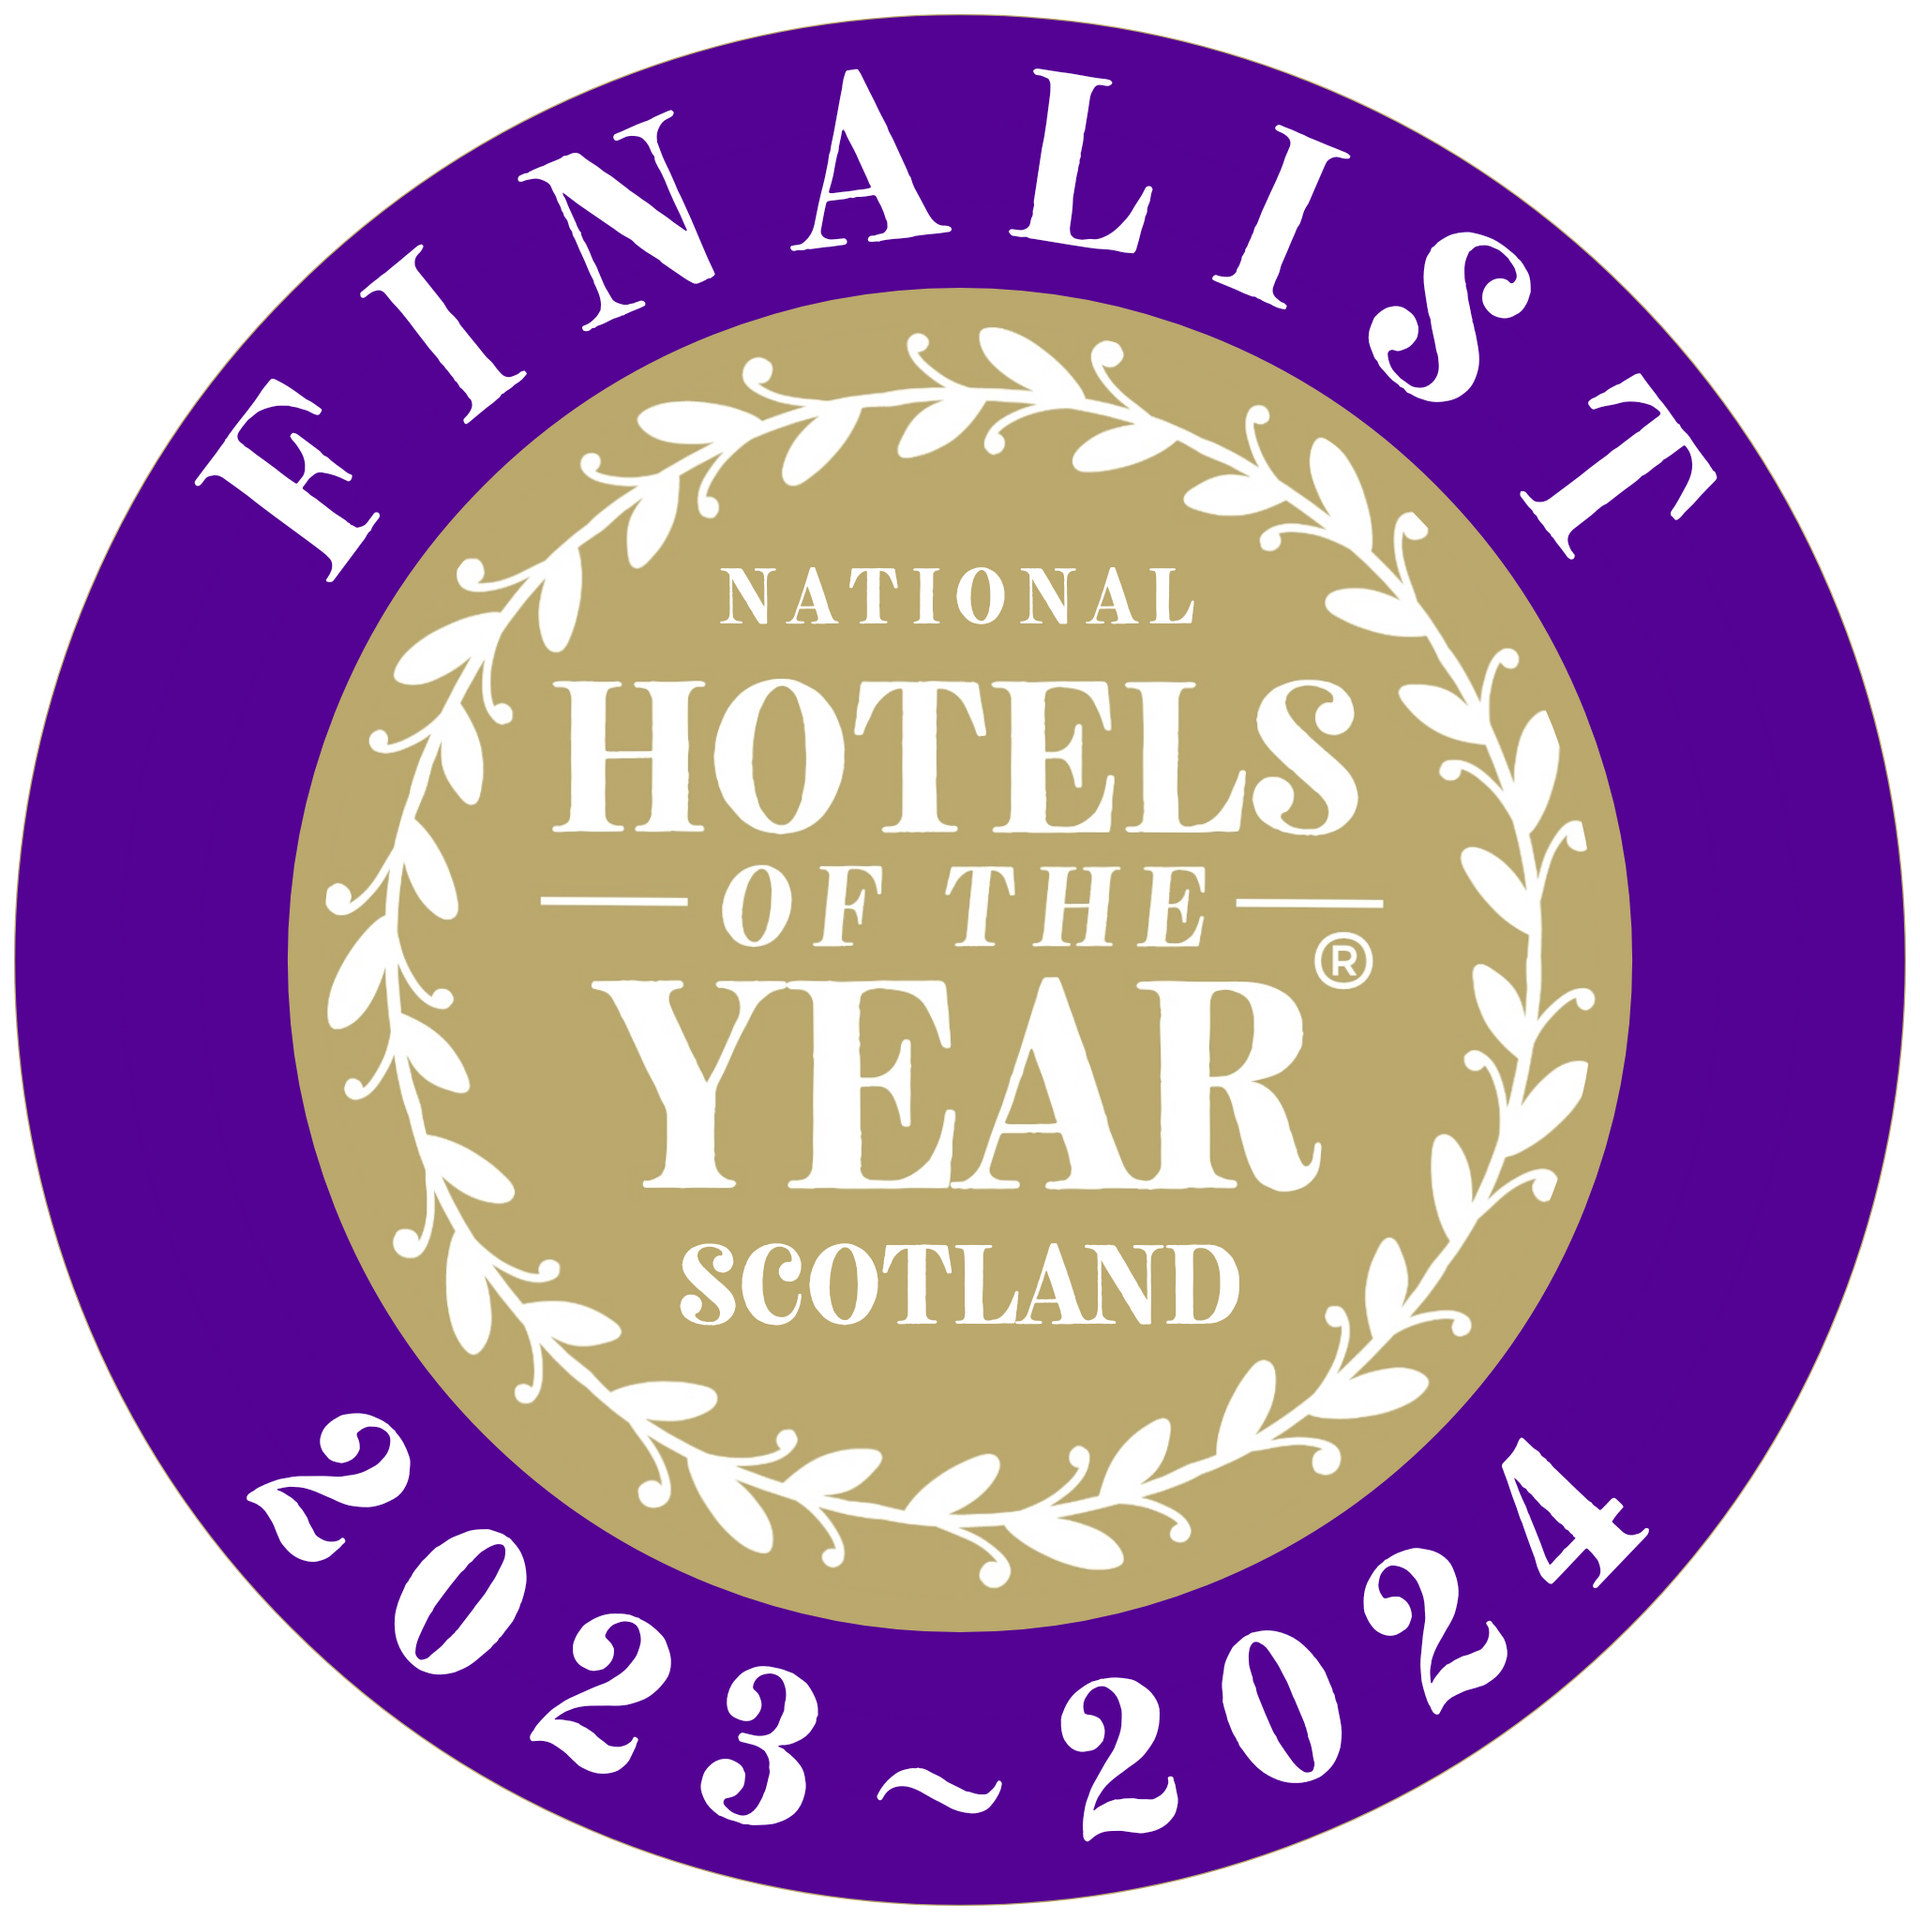 Taking the laurels: the most prestigious Scottish hotel awards of 2023